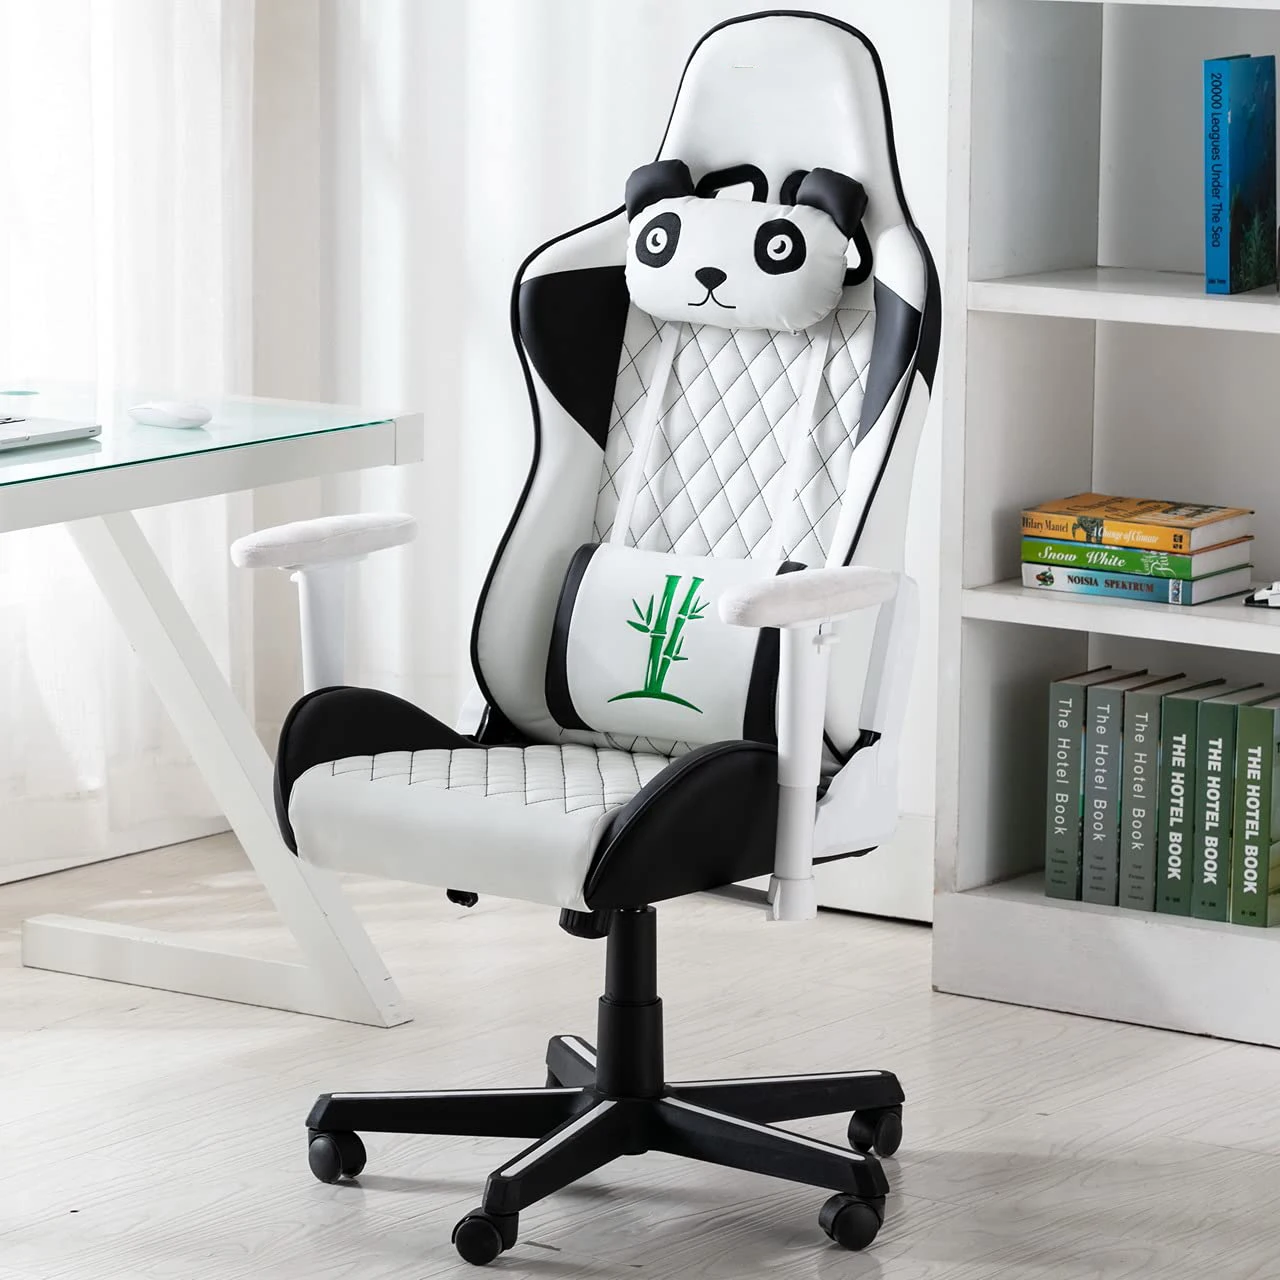 Adjustable Gamechair/ Buddy Gamer Gaming Chair Lk-2282 - China